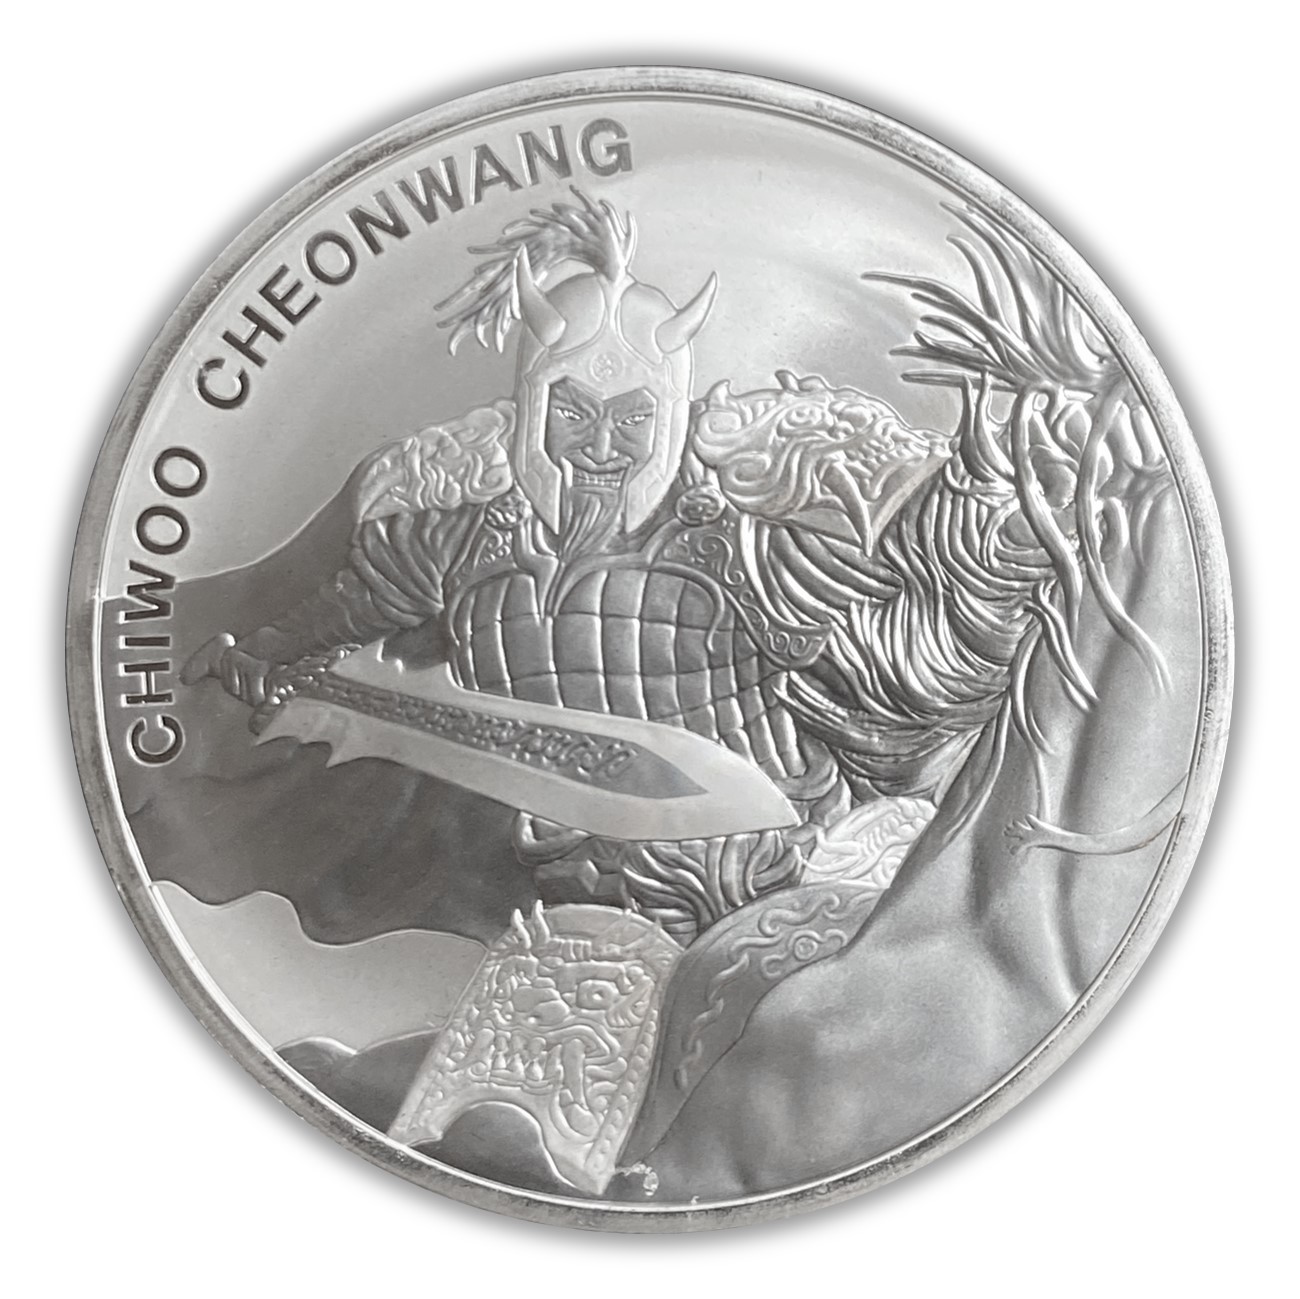 2018 South Korea Chiwoo Cheonwang 1 oz Silver Medal